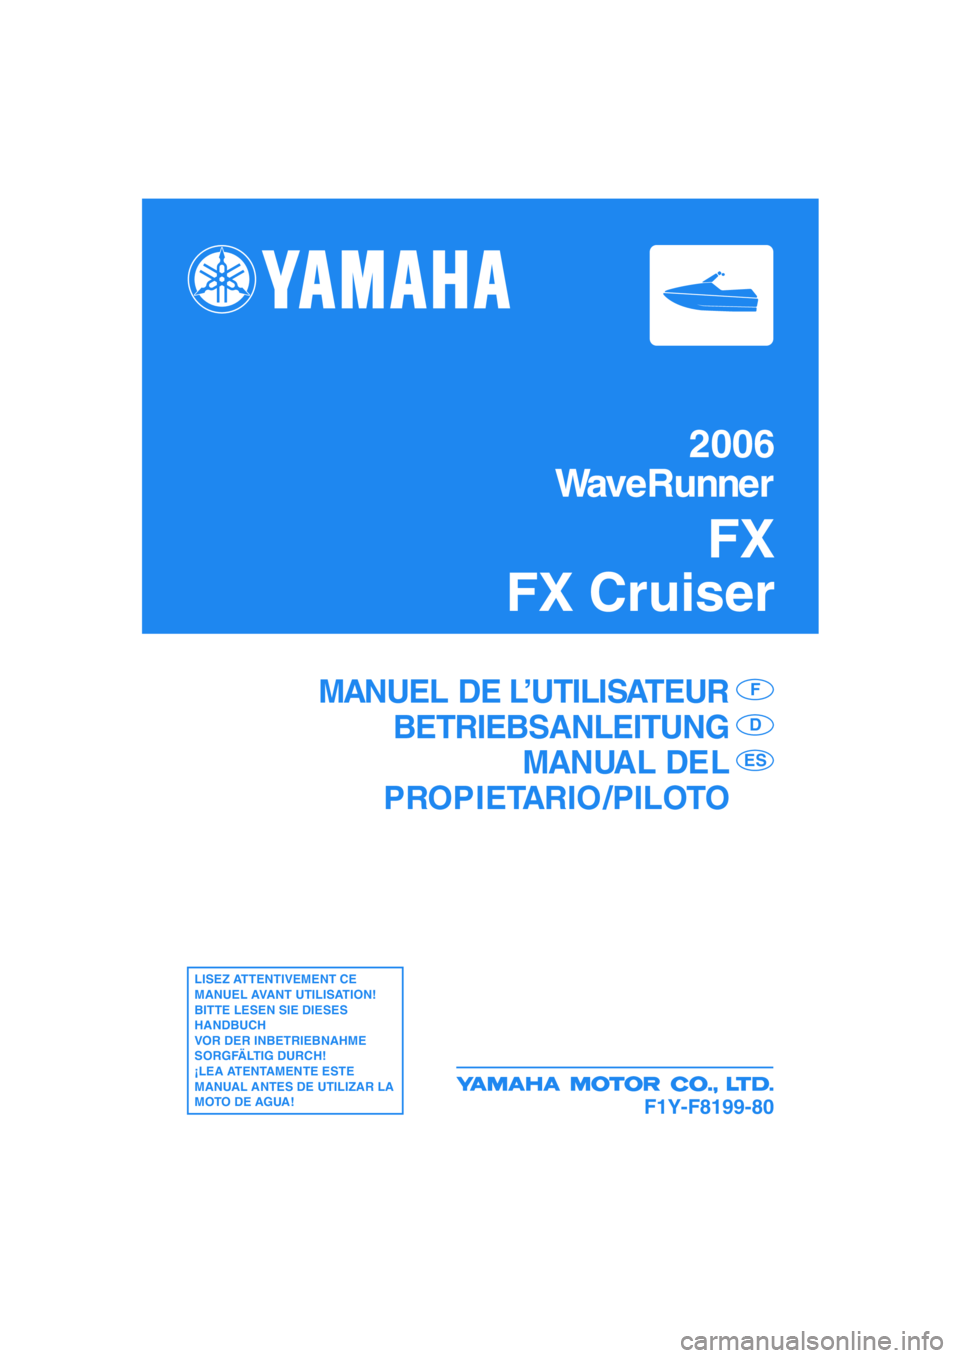 YAMAHA FX 2006  Betriebsanleitungen (in German) 2006
WaveRunner
FX
FX Cruiser
F1Y-F8199-80
MANUEL DE L’UTILISATEUR
BETRIEBSANLEITUNG
MANUAL DEL
PROPIETARIO /PILOTOF
D
ES
LISEZ ATTENTIVEMENT CE 
MANUEL AVANT UTILISATION!
BITTE LESEN SIE DIESES 
HA